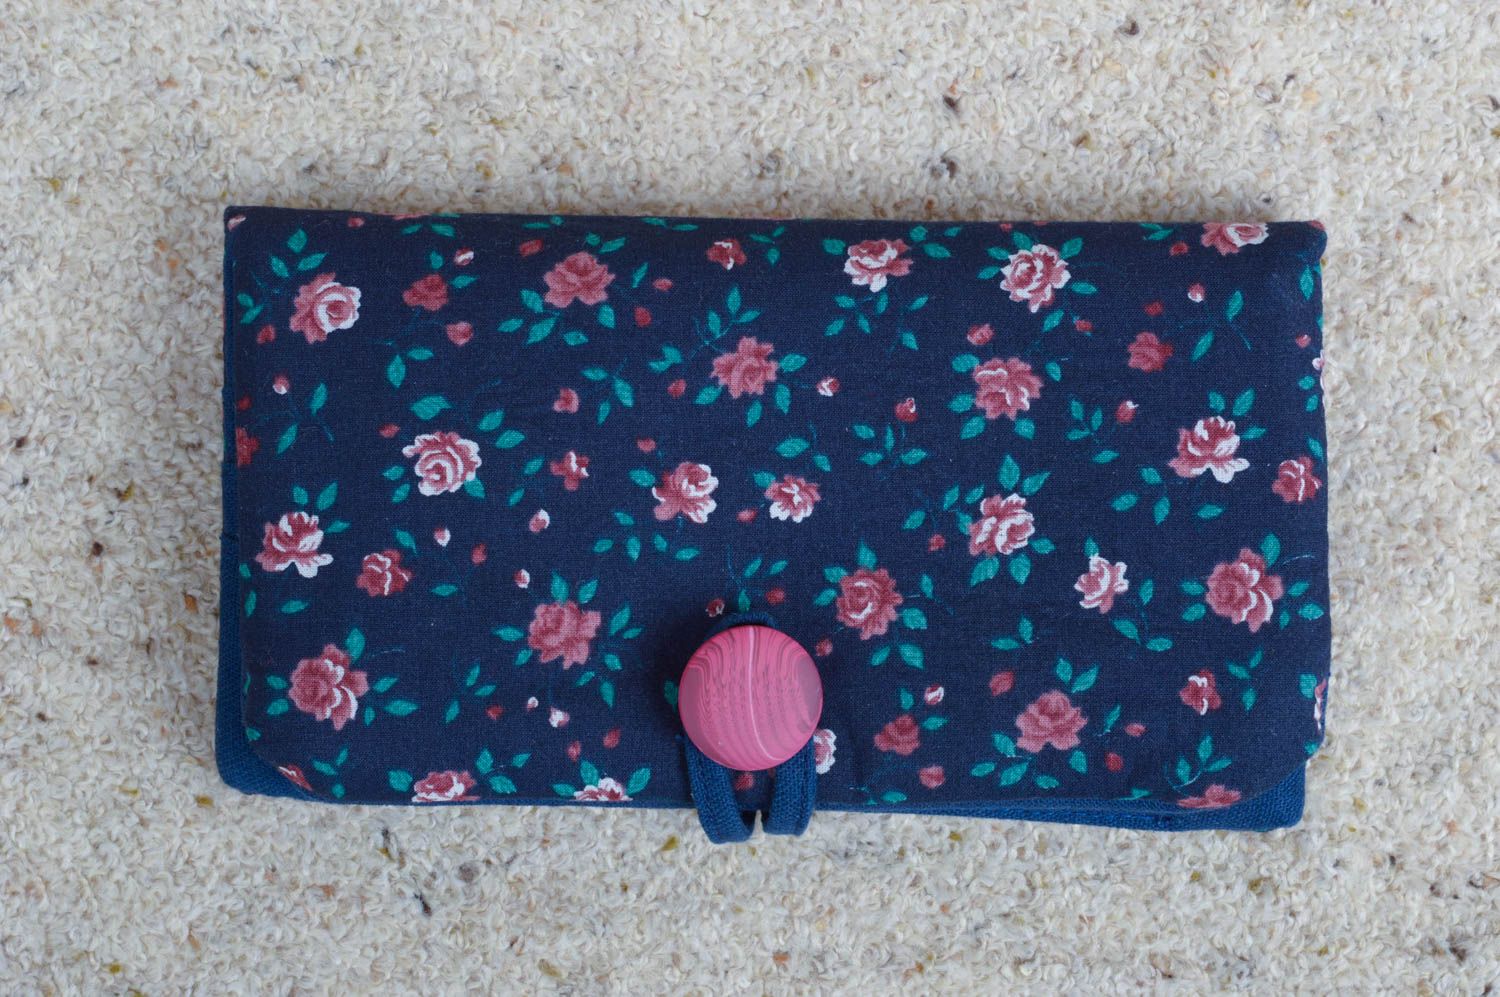 Cute handmade purse designs womens fabric wallet fashion accessories for girls photo 1